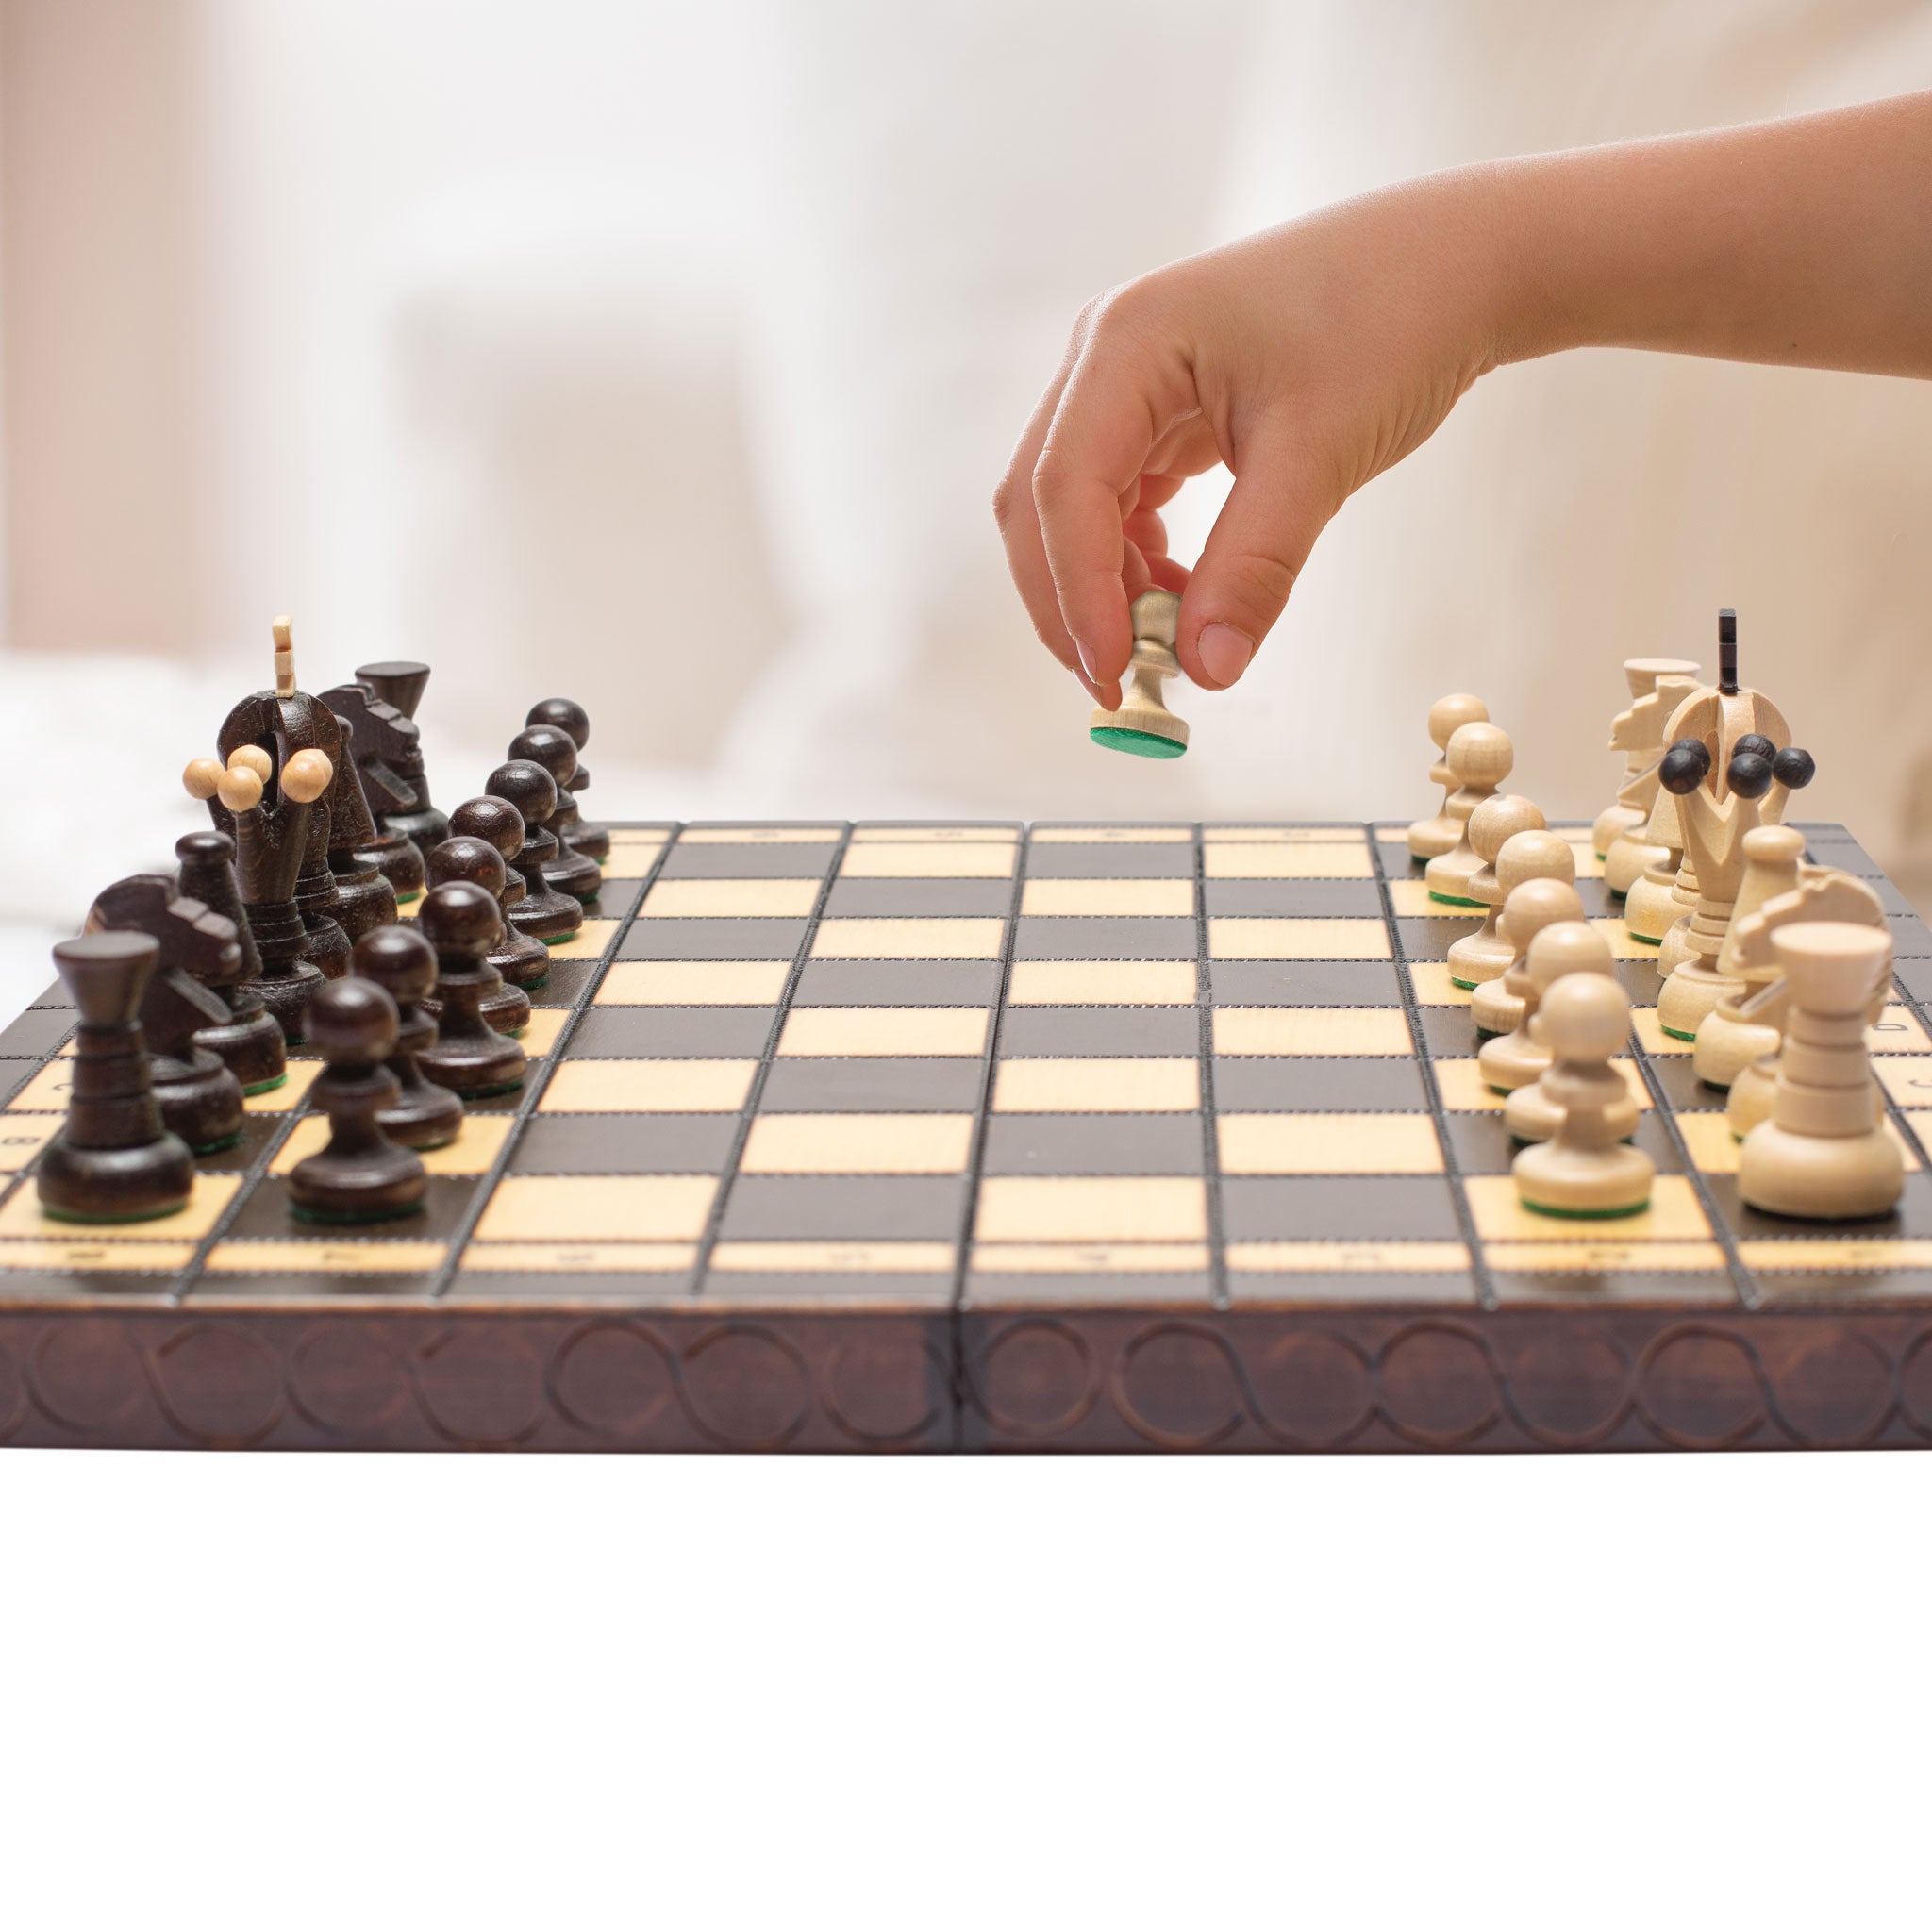 Husaria European International Chess Wooden Game Set, "King's Classic" - 13.8" Medium Size Chess Set-Husaria